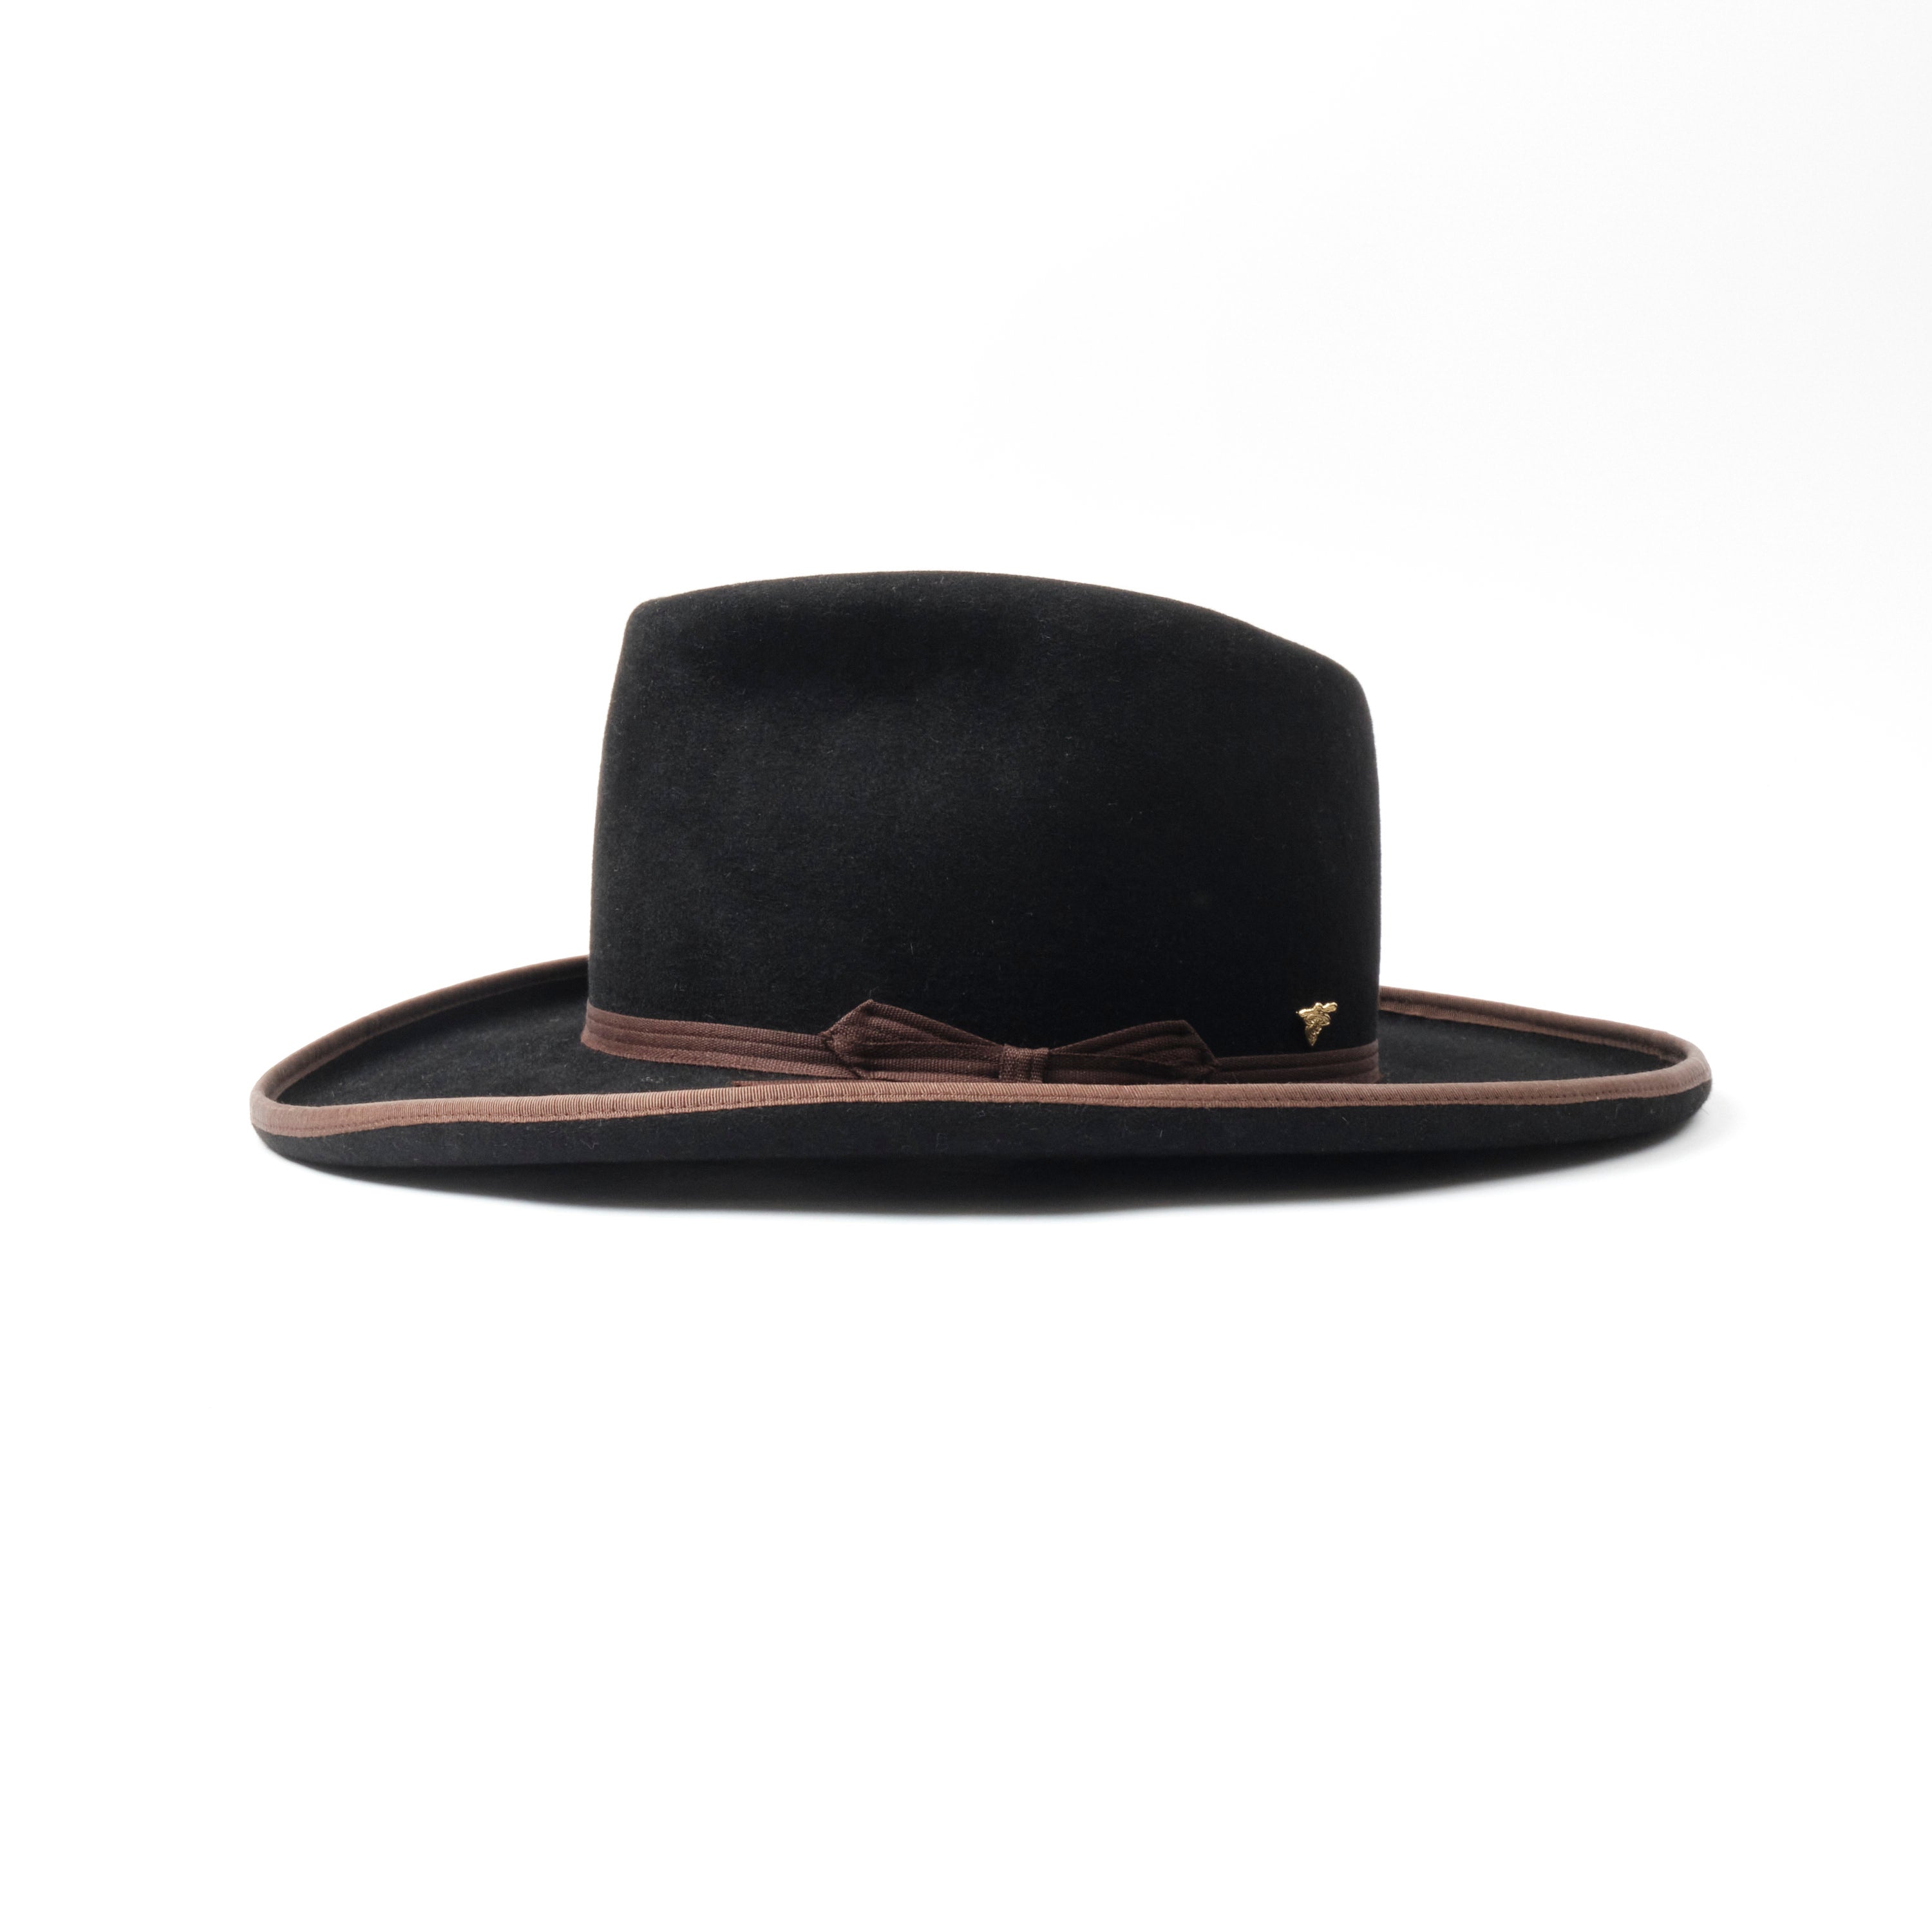 Bowman Hat Co. x Freenote Cloth Aces High